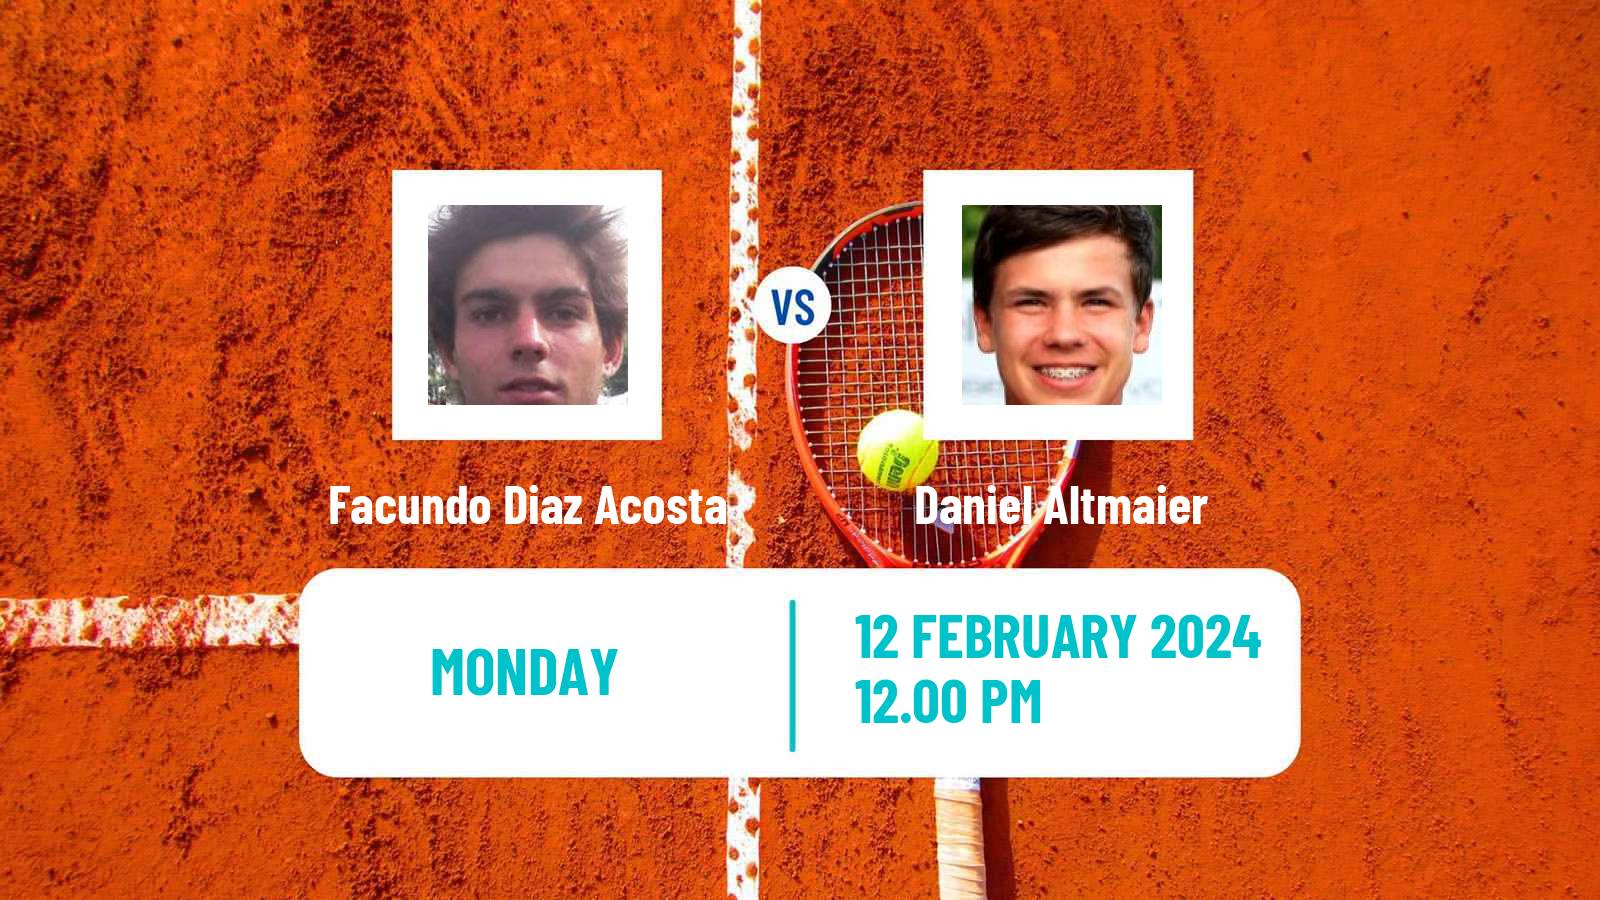 Tennis ATP Buenos Aires Facundo Diaz Acosta - Daniel Altmaier